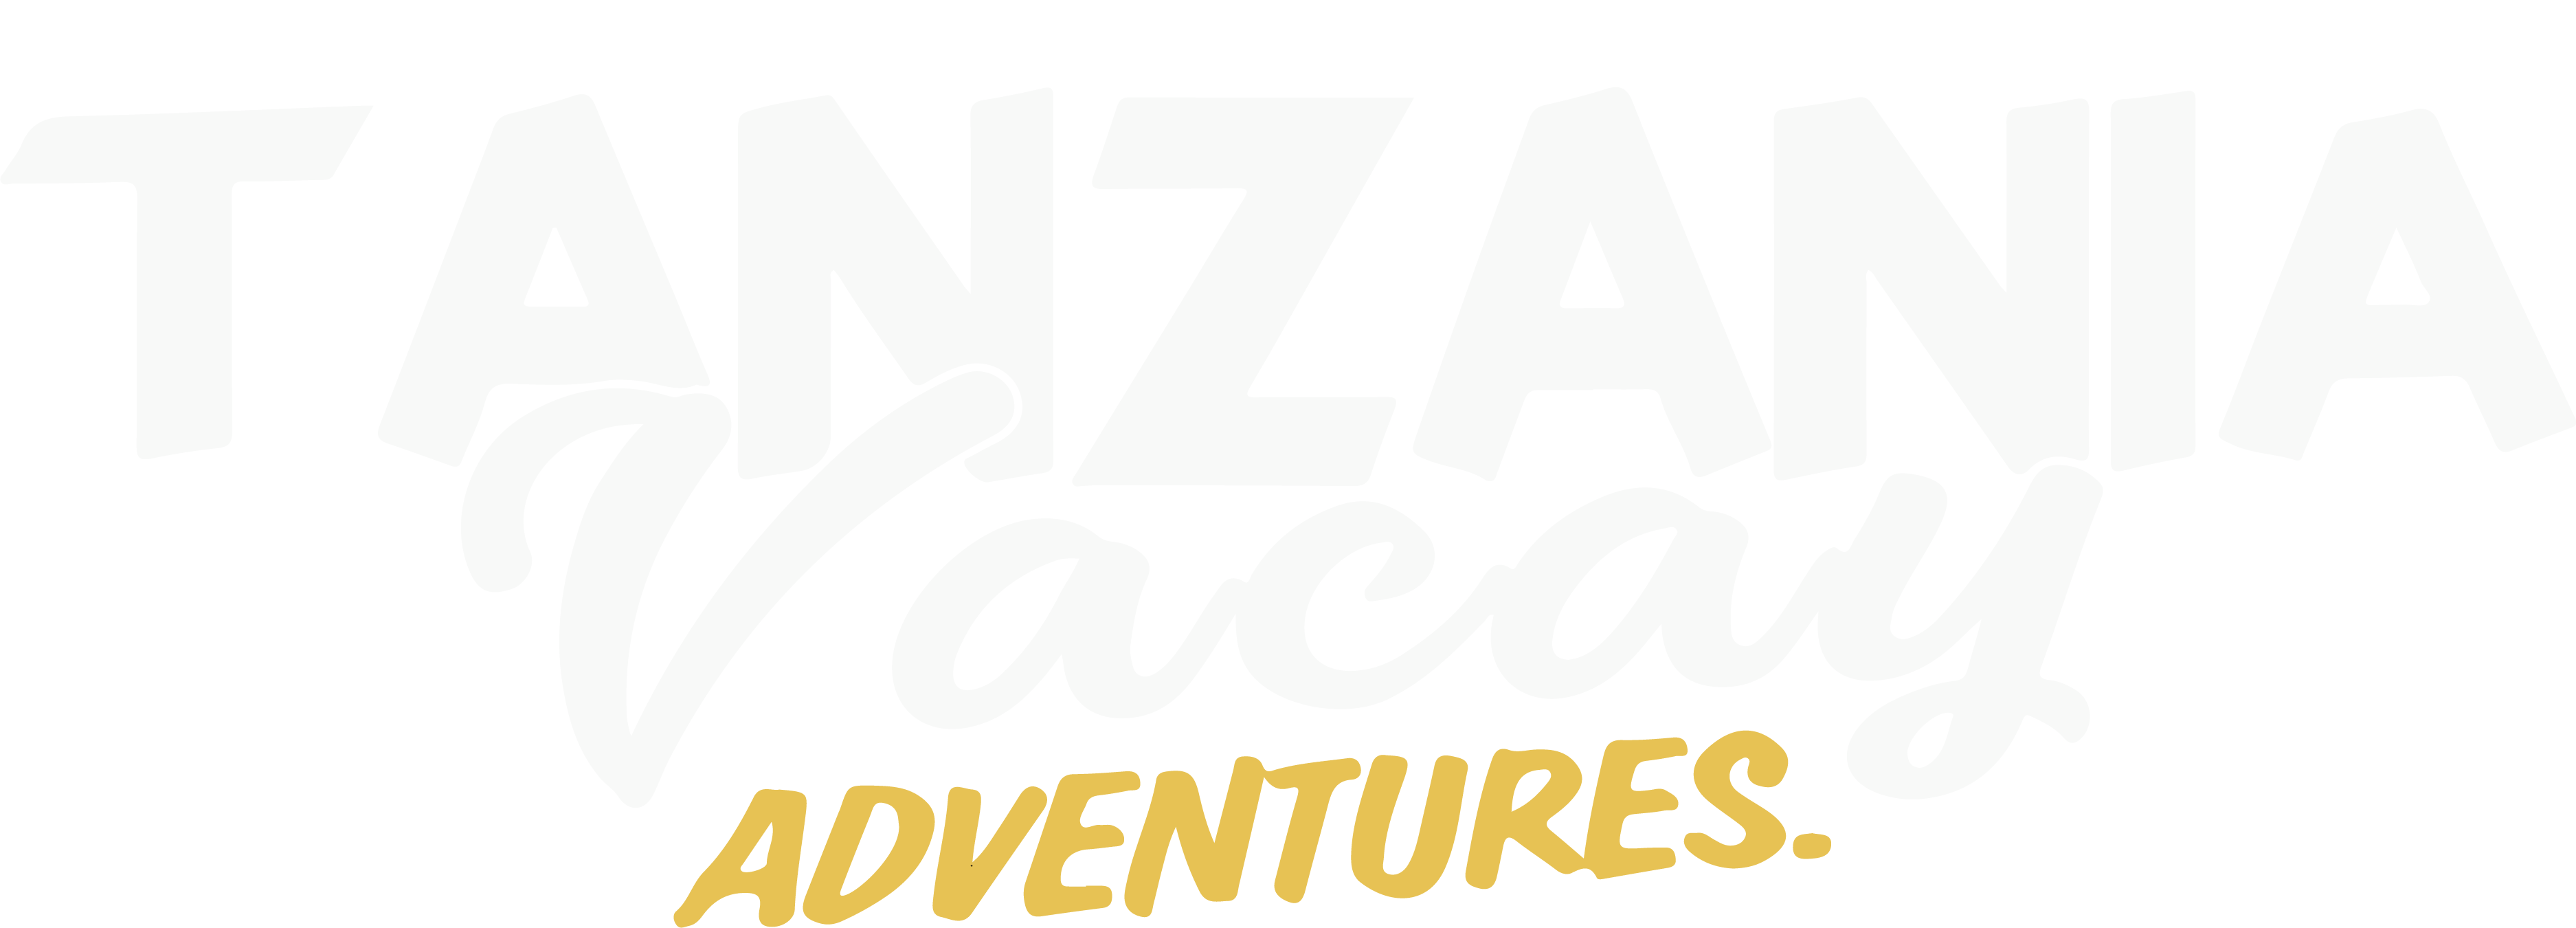 Tanzania Vacay Adventures PNG LOGO